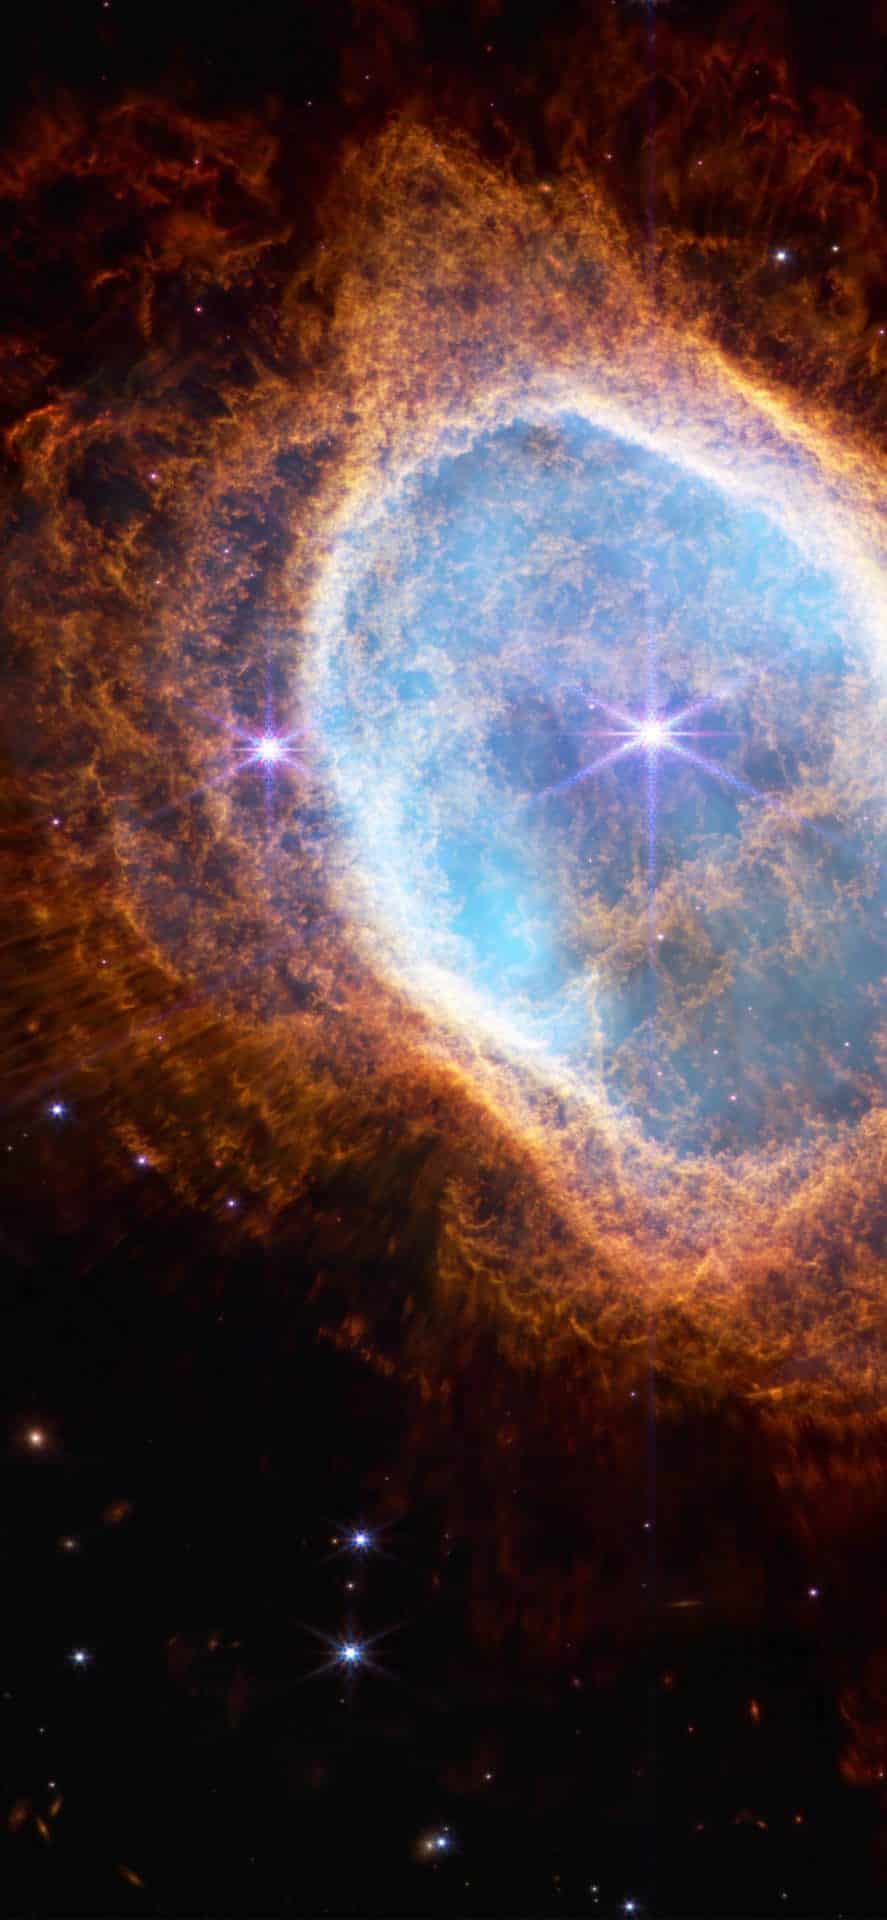 Obrázok ako pozadie pre iPhone z teleskopu Jamesa Webba